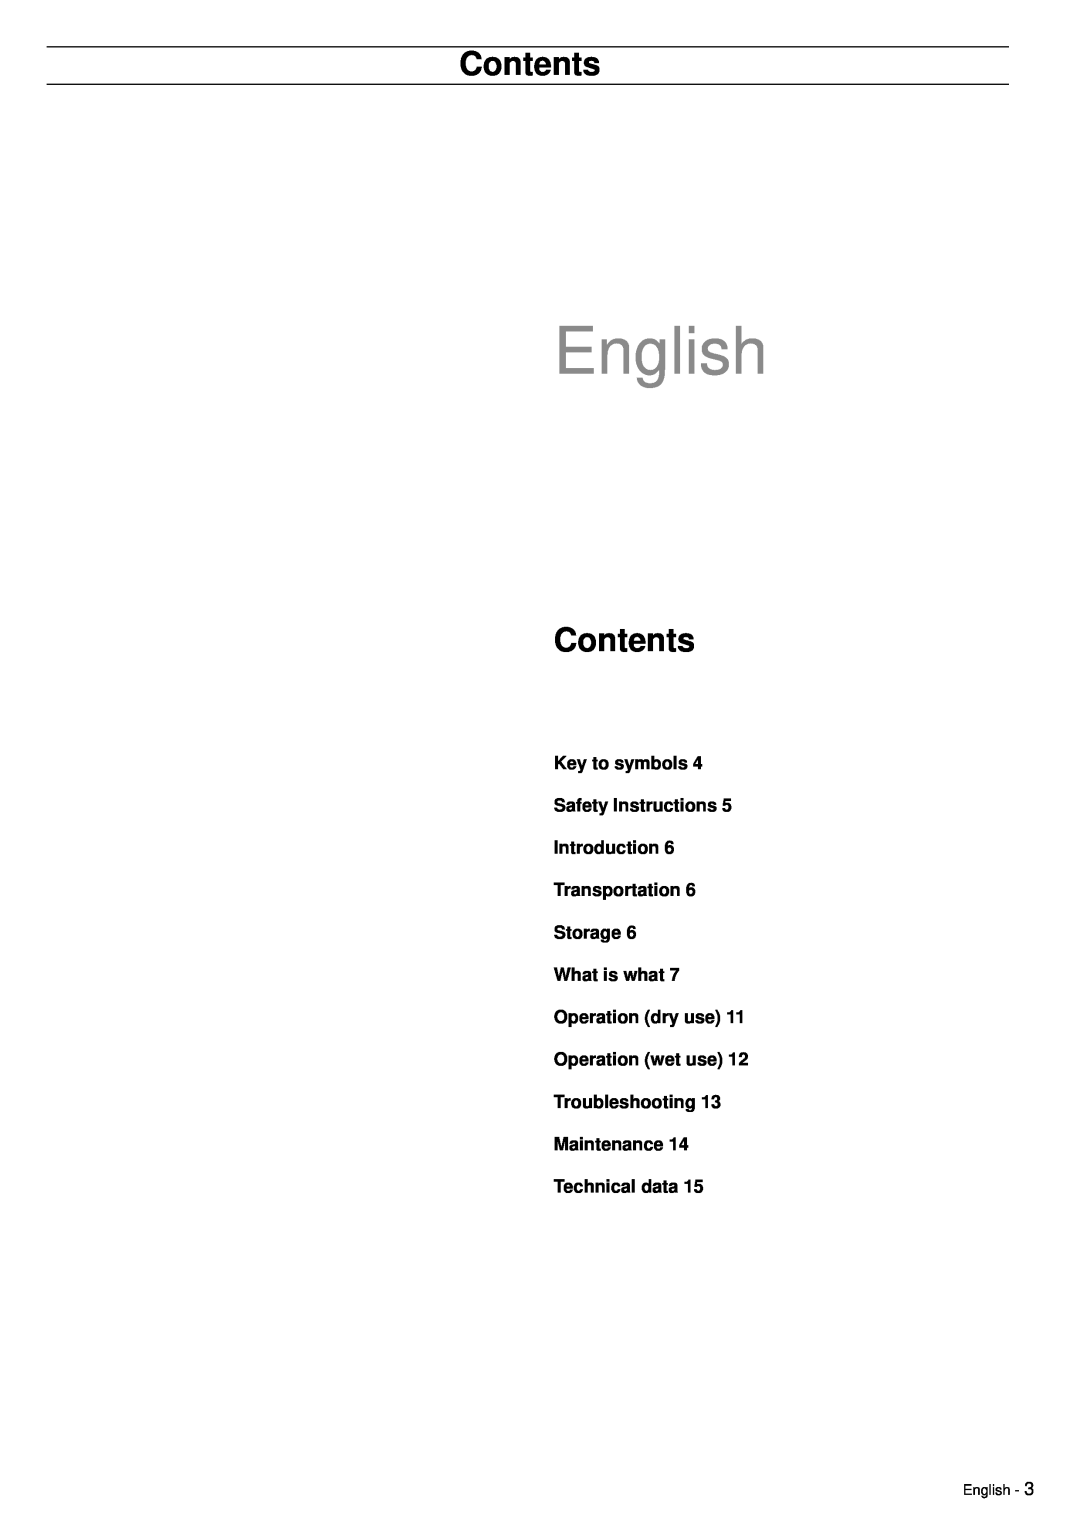 Husqvarna DC5500 manuel dutilisation English, Contents 